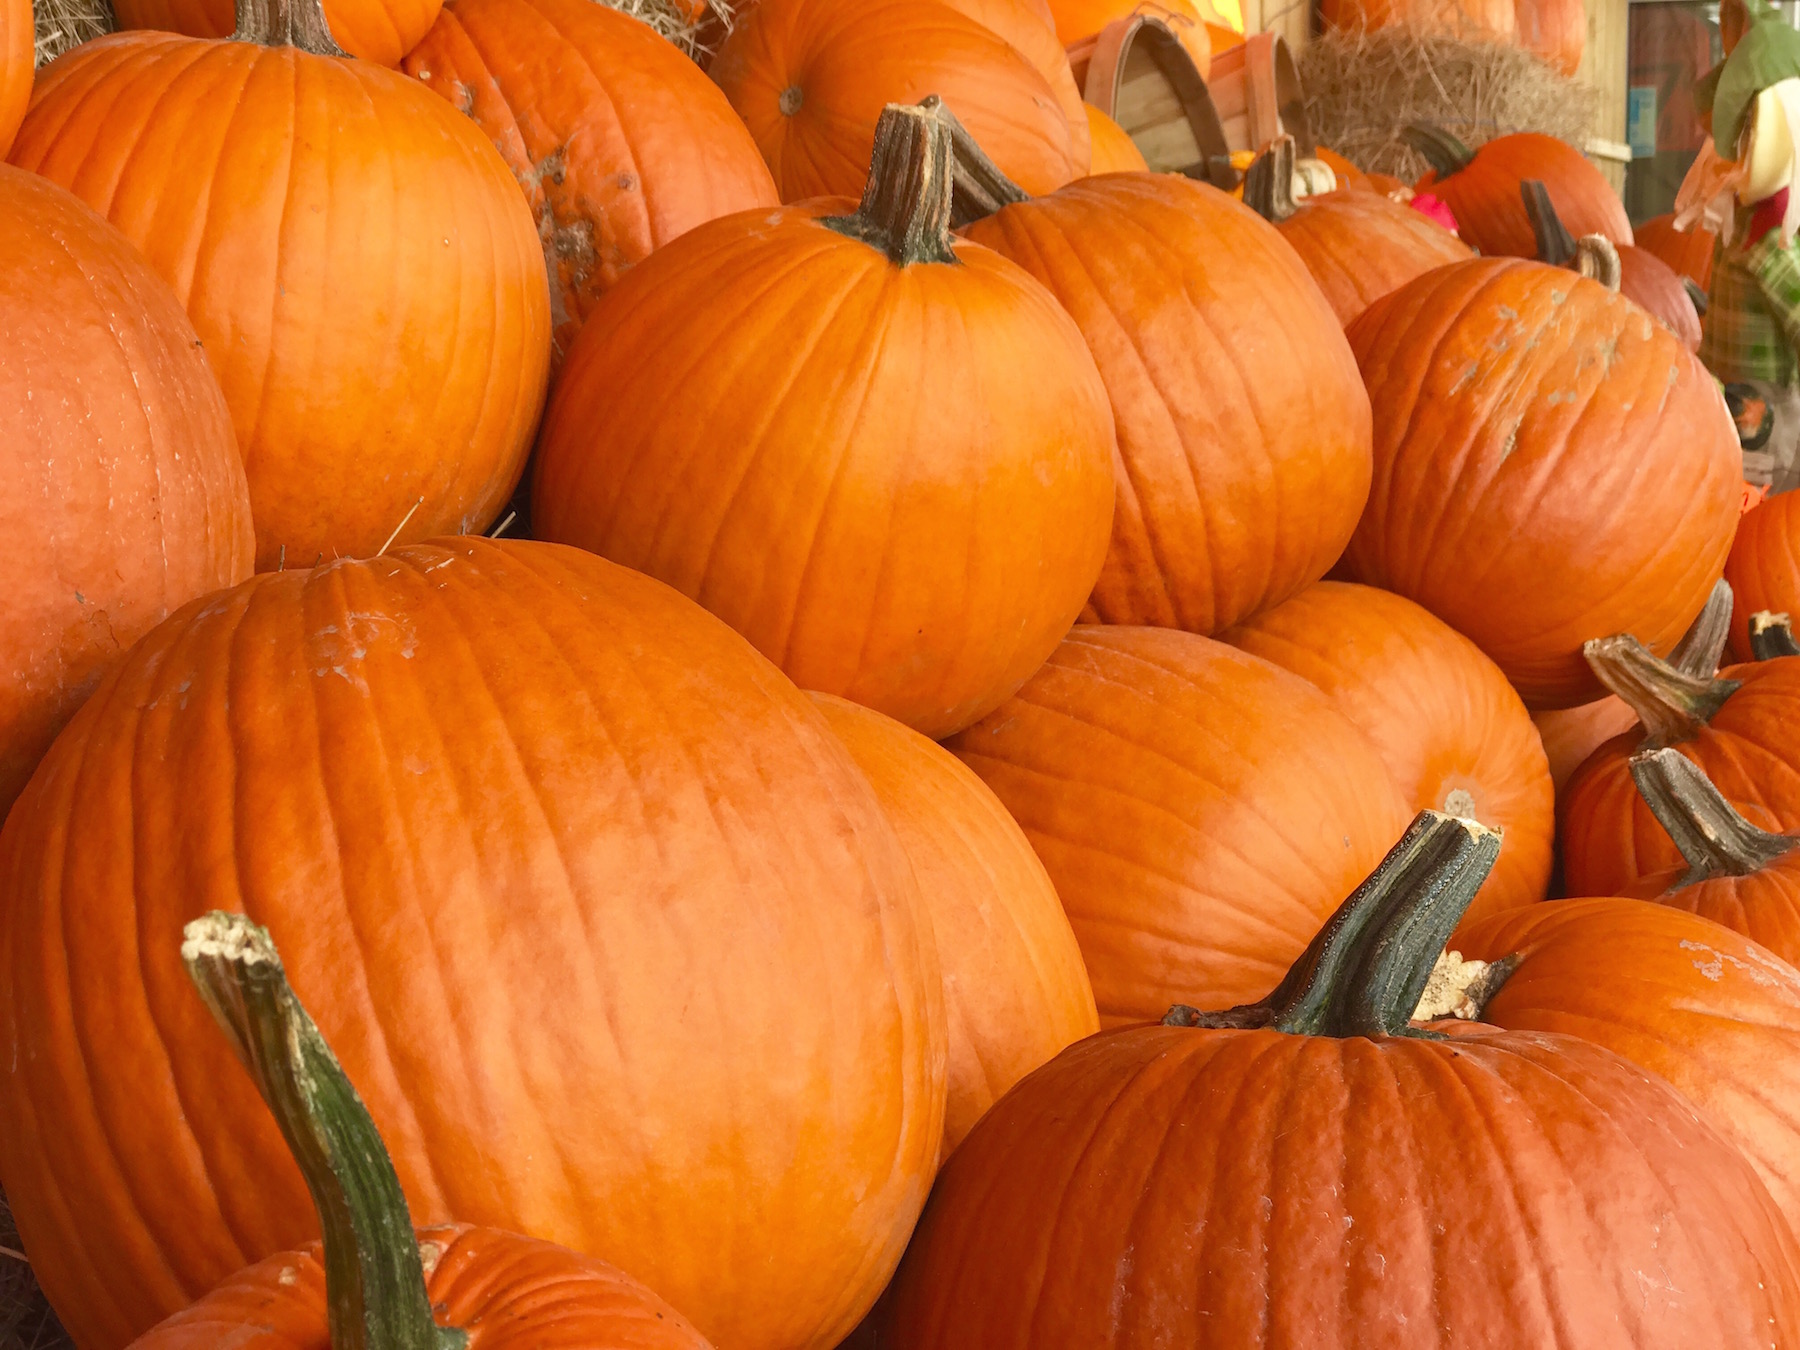 Fall pumpkins